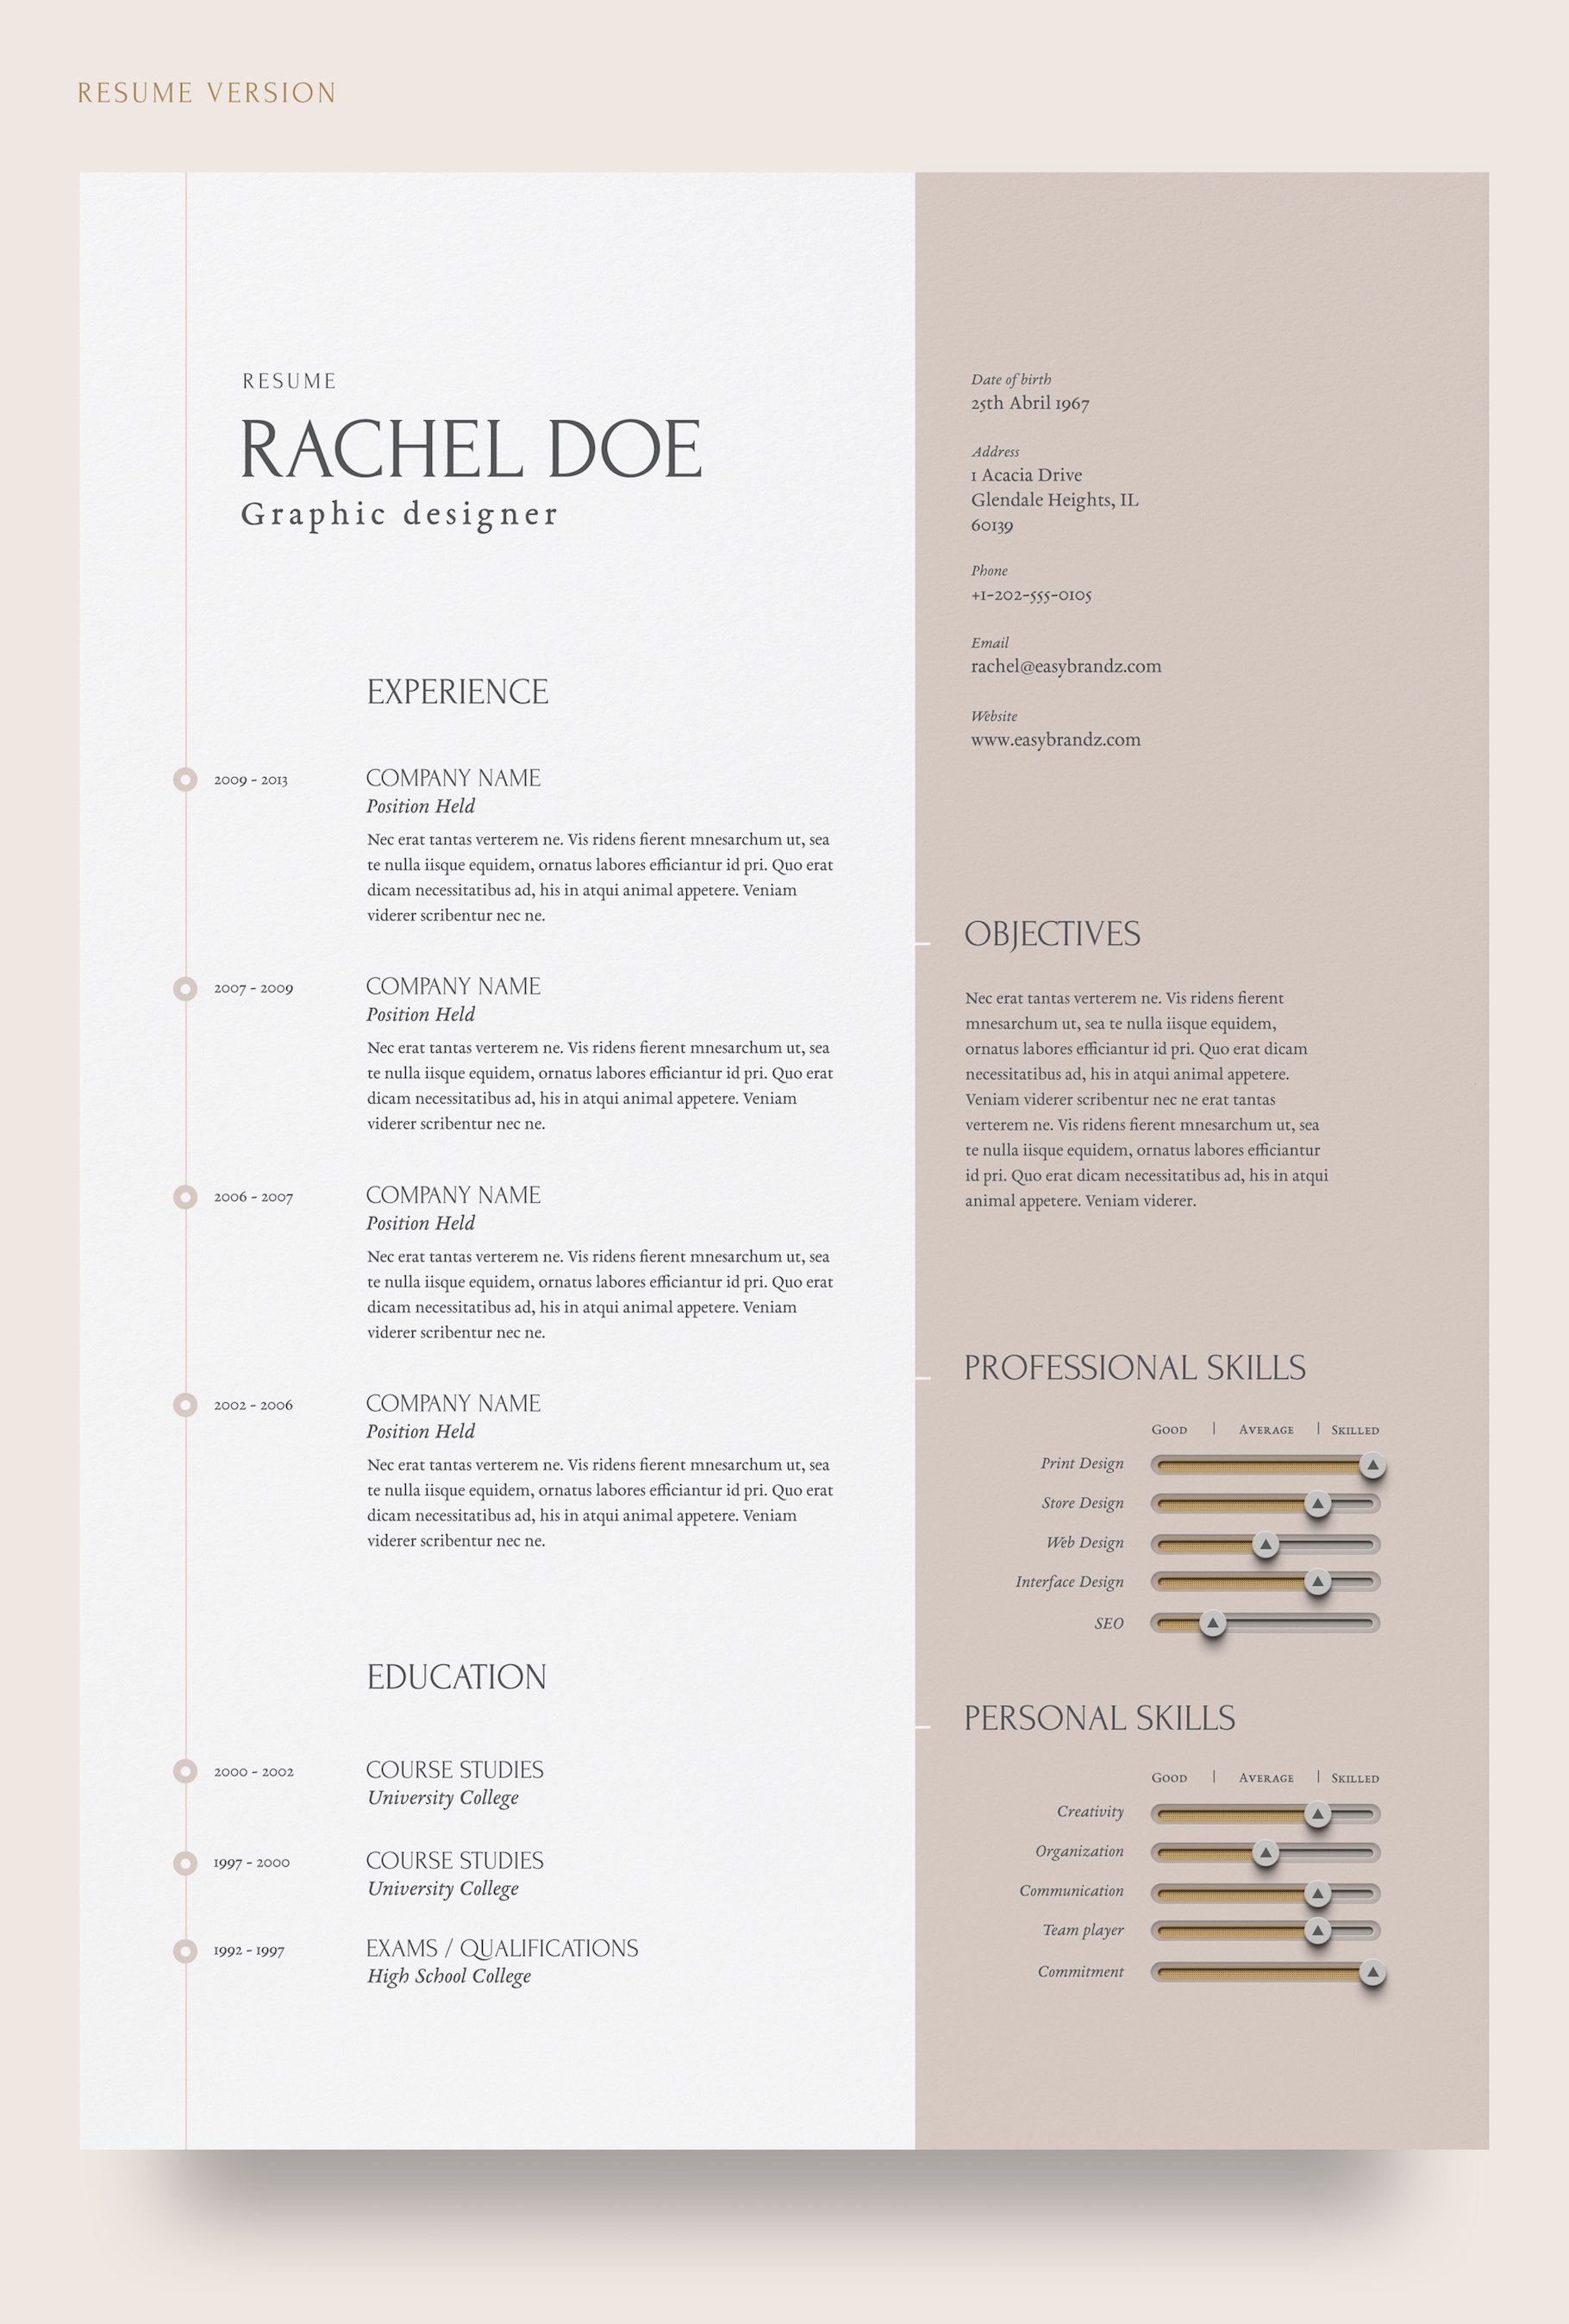 Resume & Portfolio Template preview image.